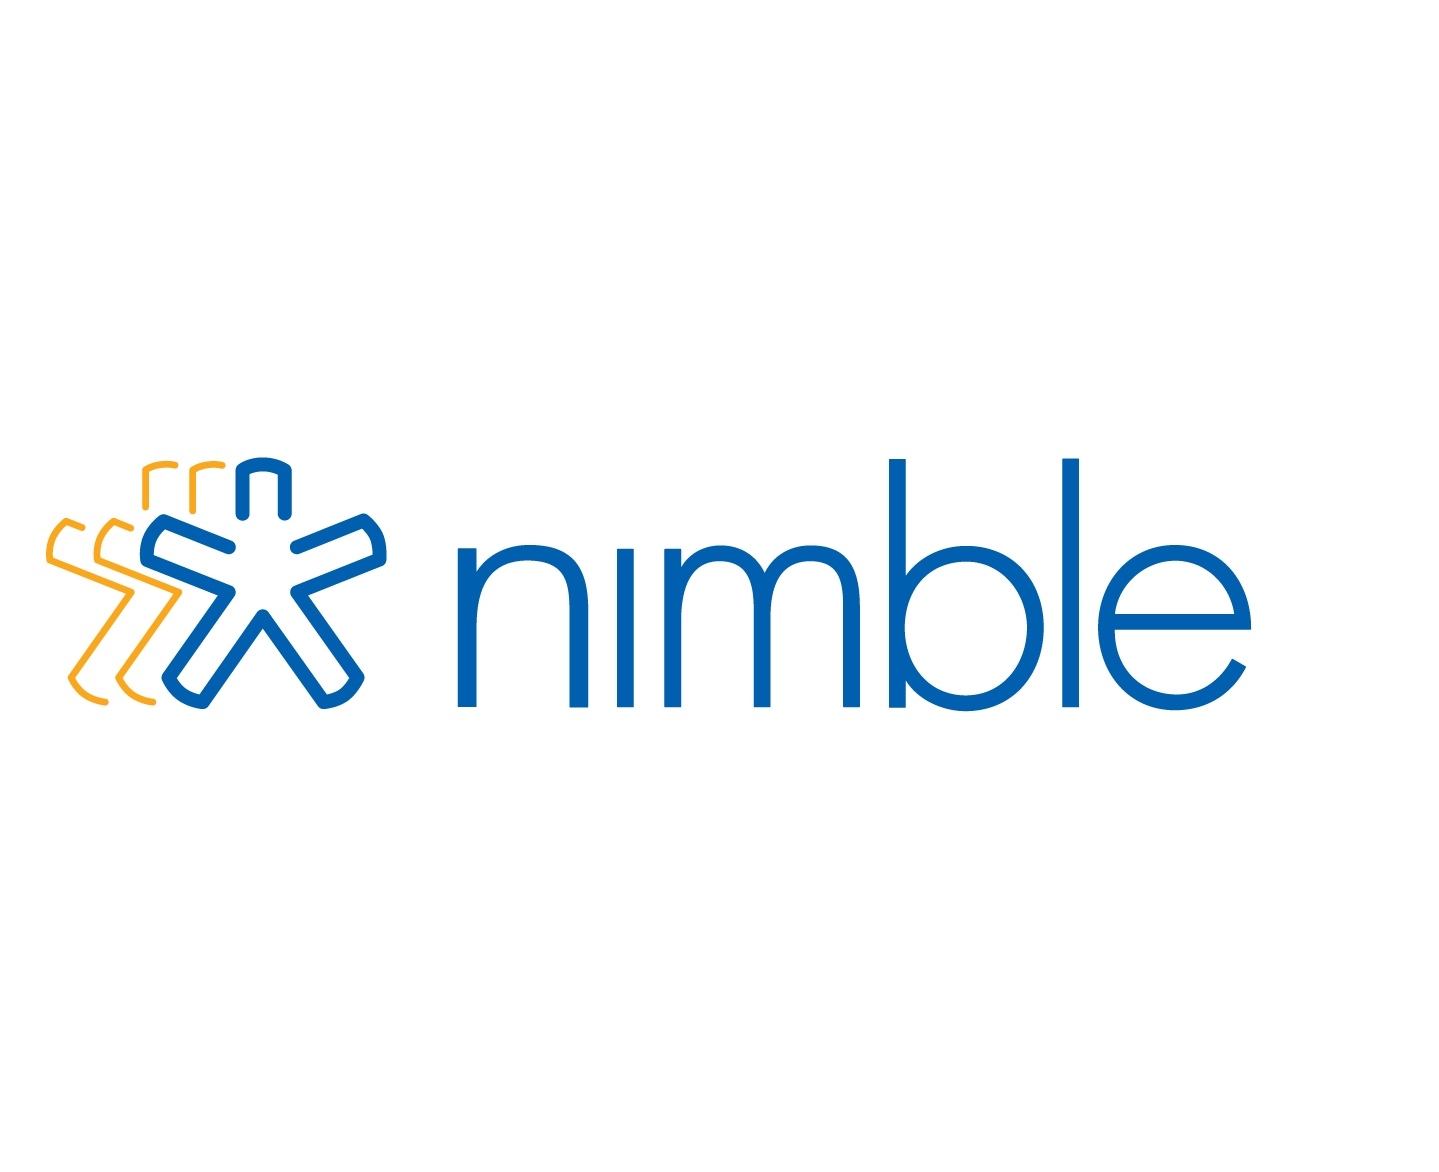  Leading Small Business CRM Application Logo: Nimble